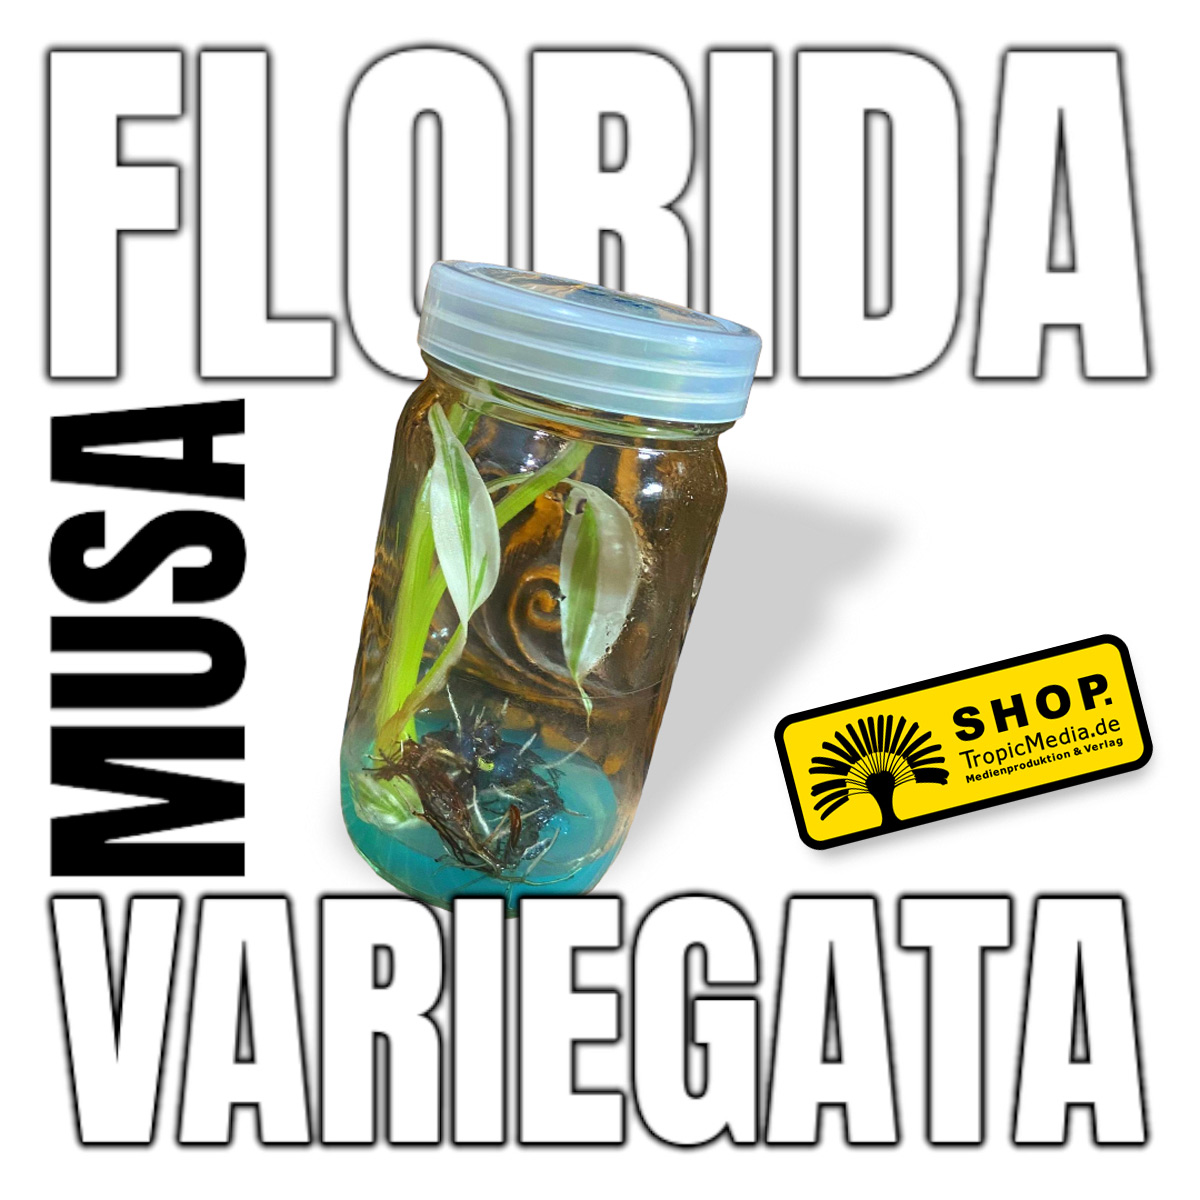 Musa Florida 100% Variegata Tissue Culture (TC)